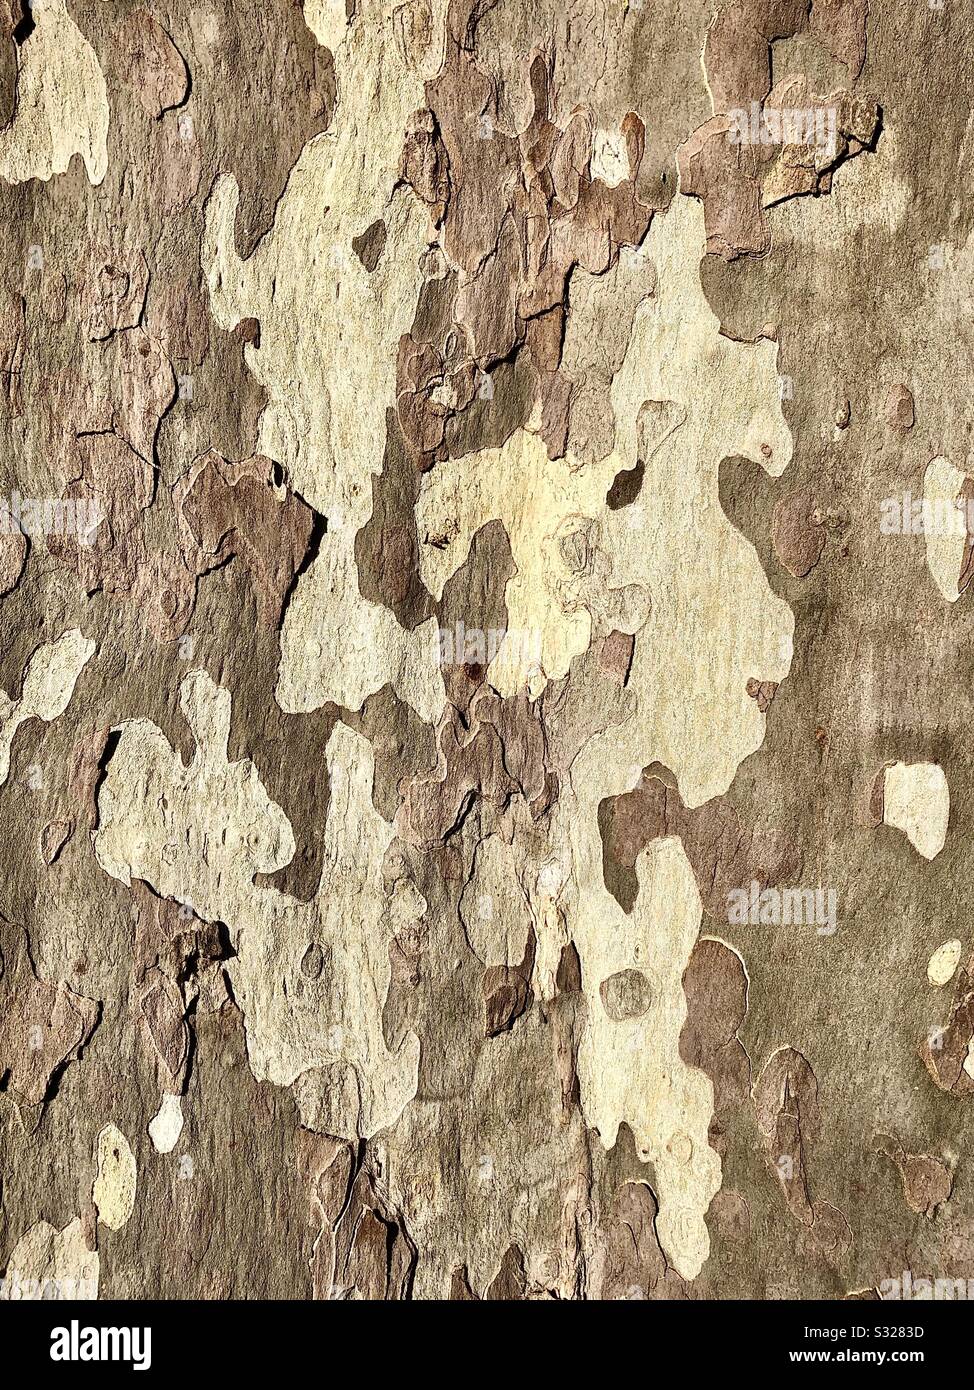 Bark of Plane tree. Stock Photo